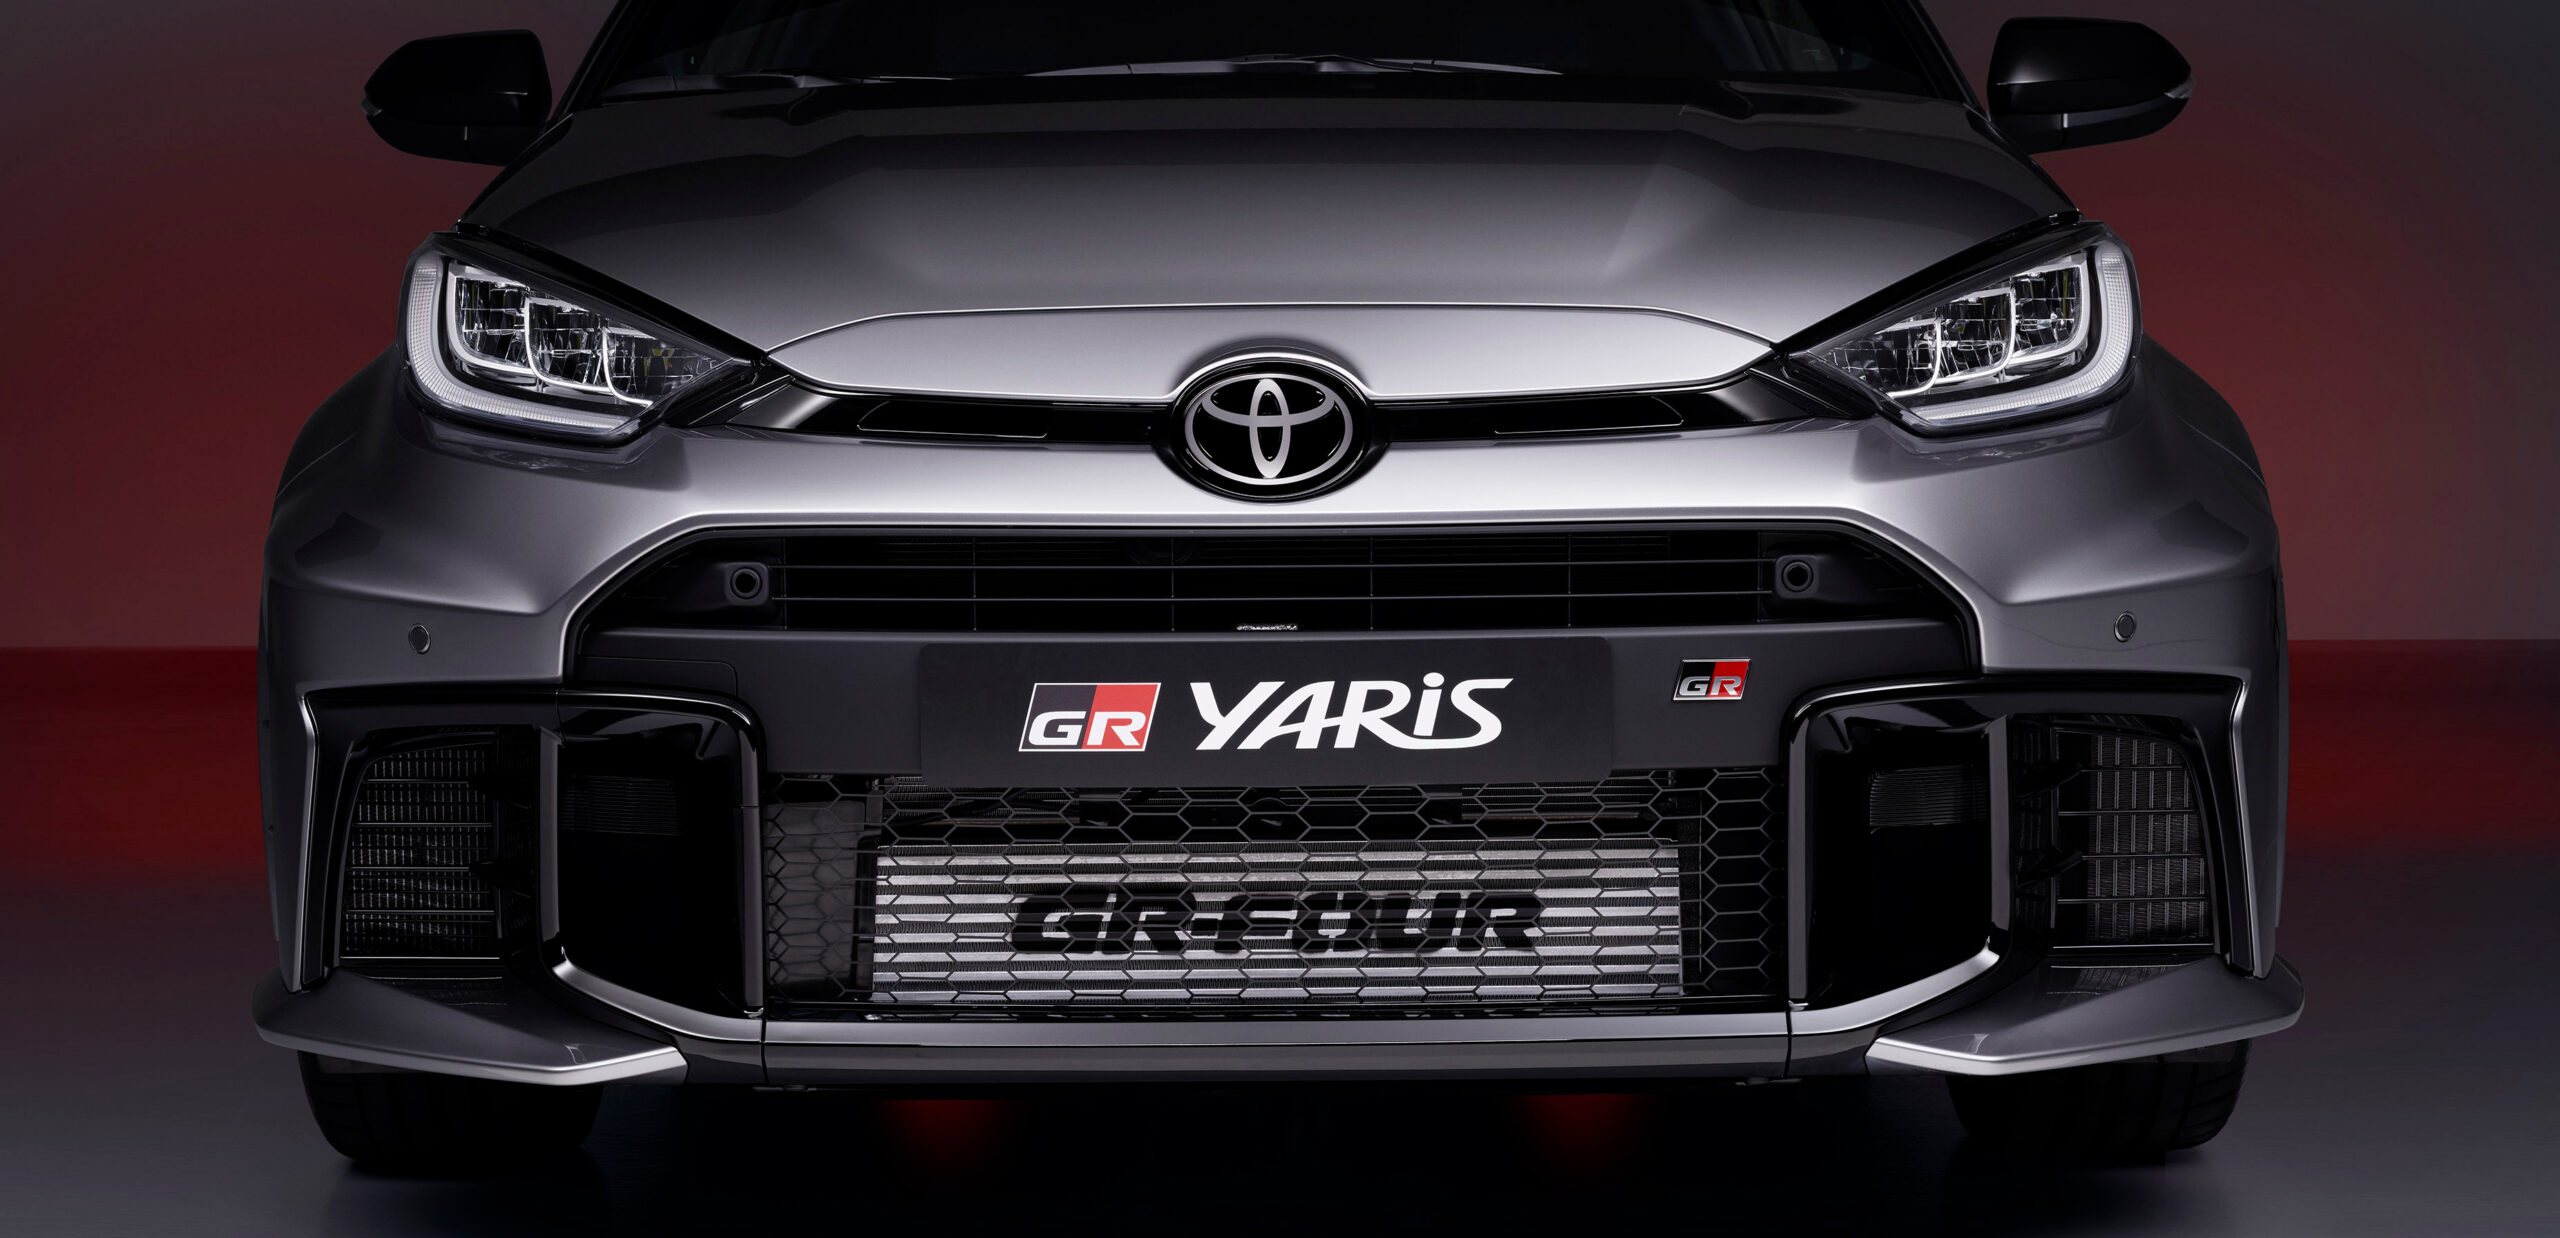 Estreno Mundial Nuevo Toyota GR Yaris